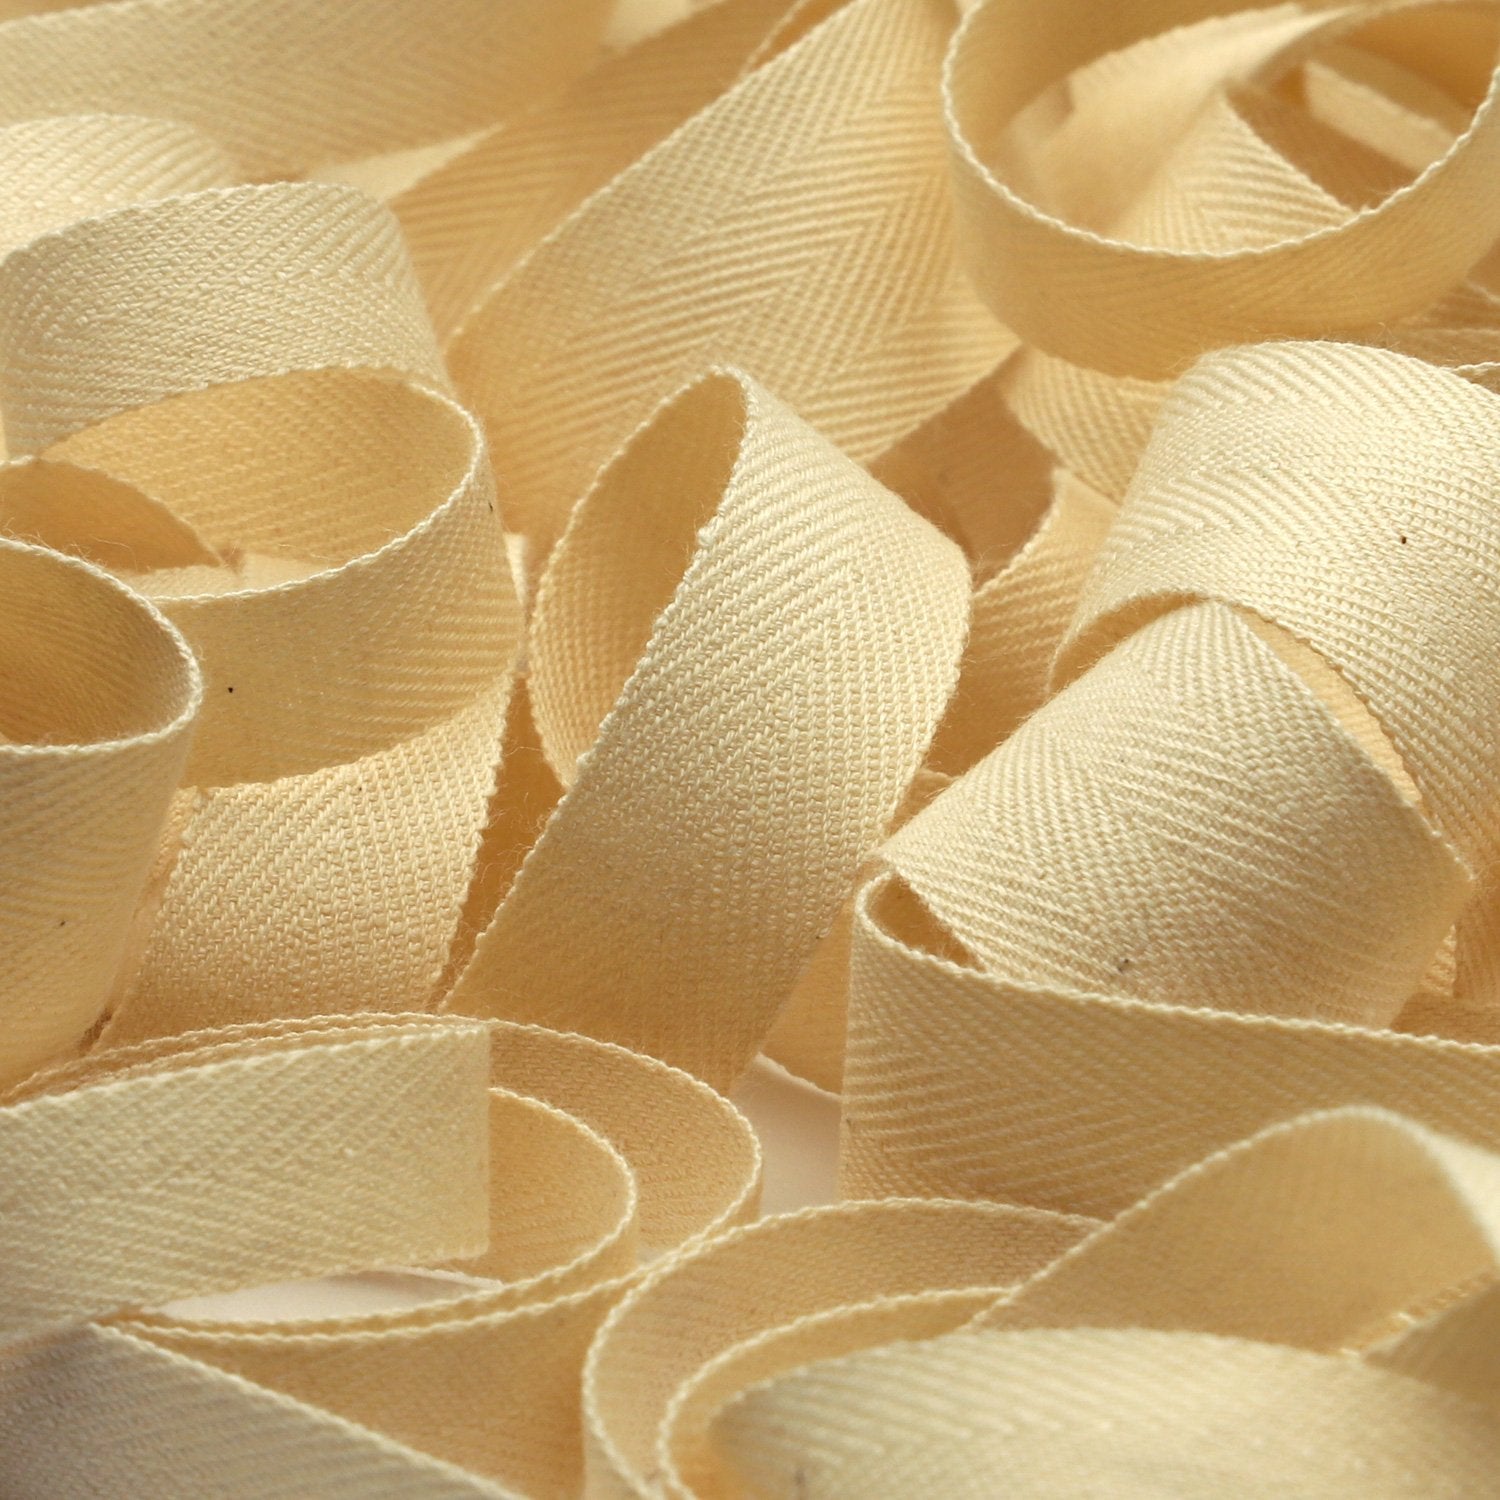 FUJIYAMA RIBBON [Wholesale] Organic Cotton Herringbone Ribbon 9mm Ecru 20 Meters Roll